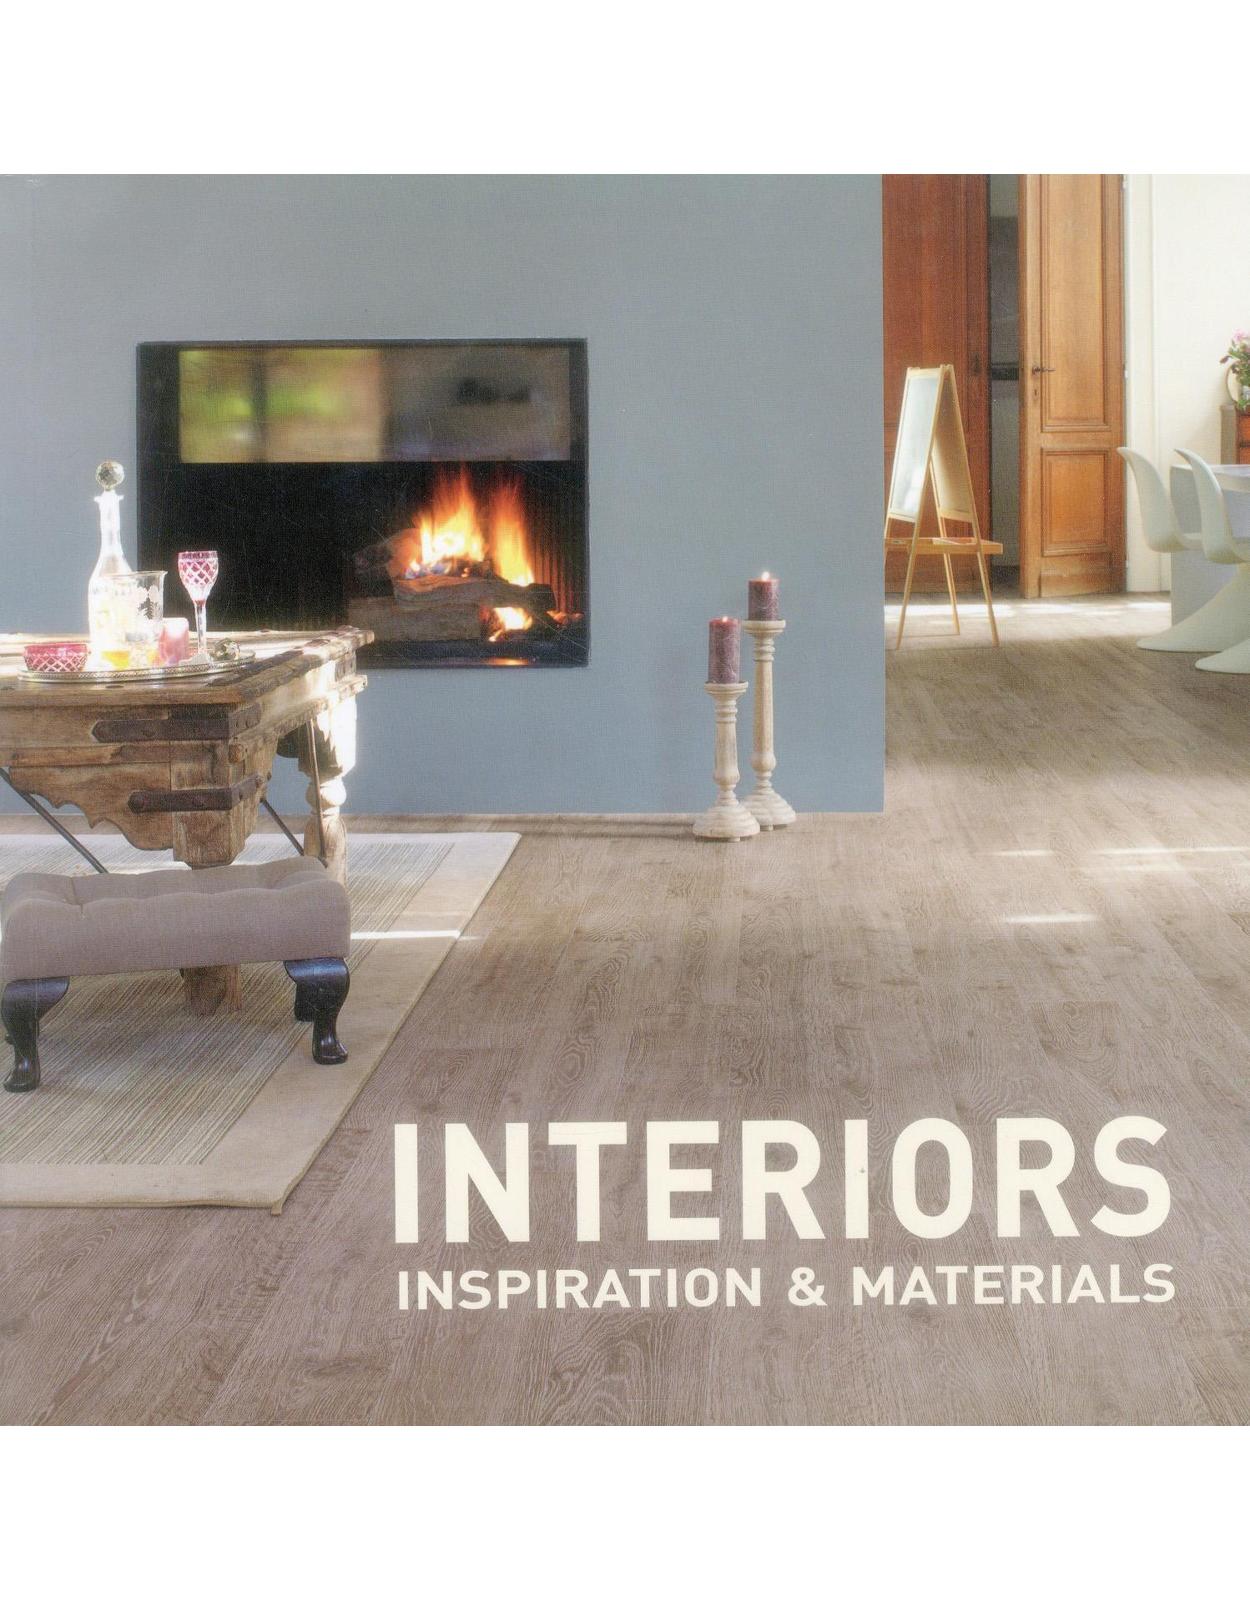 Interiors: Inspiration & Materials